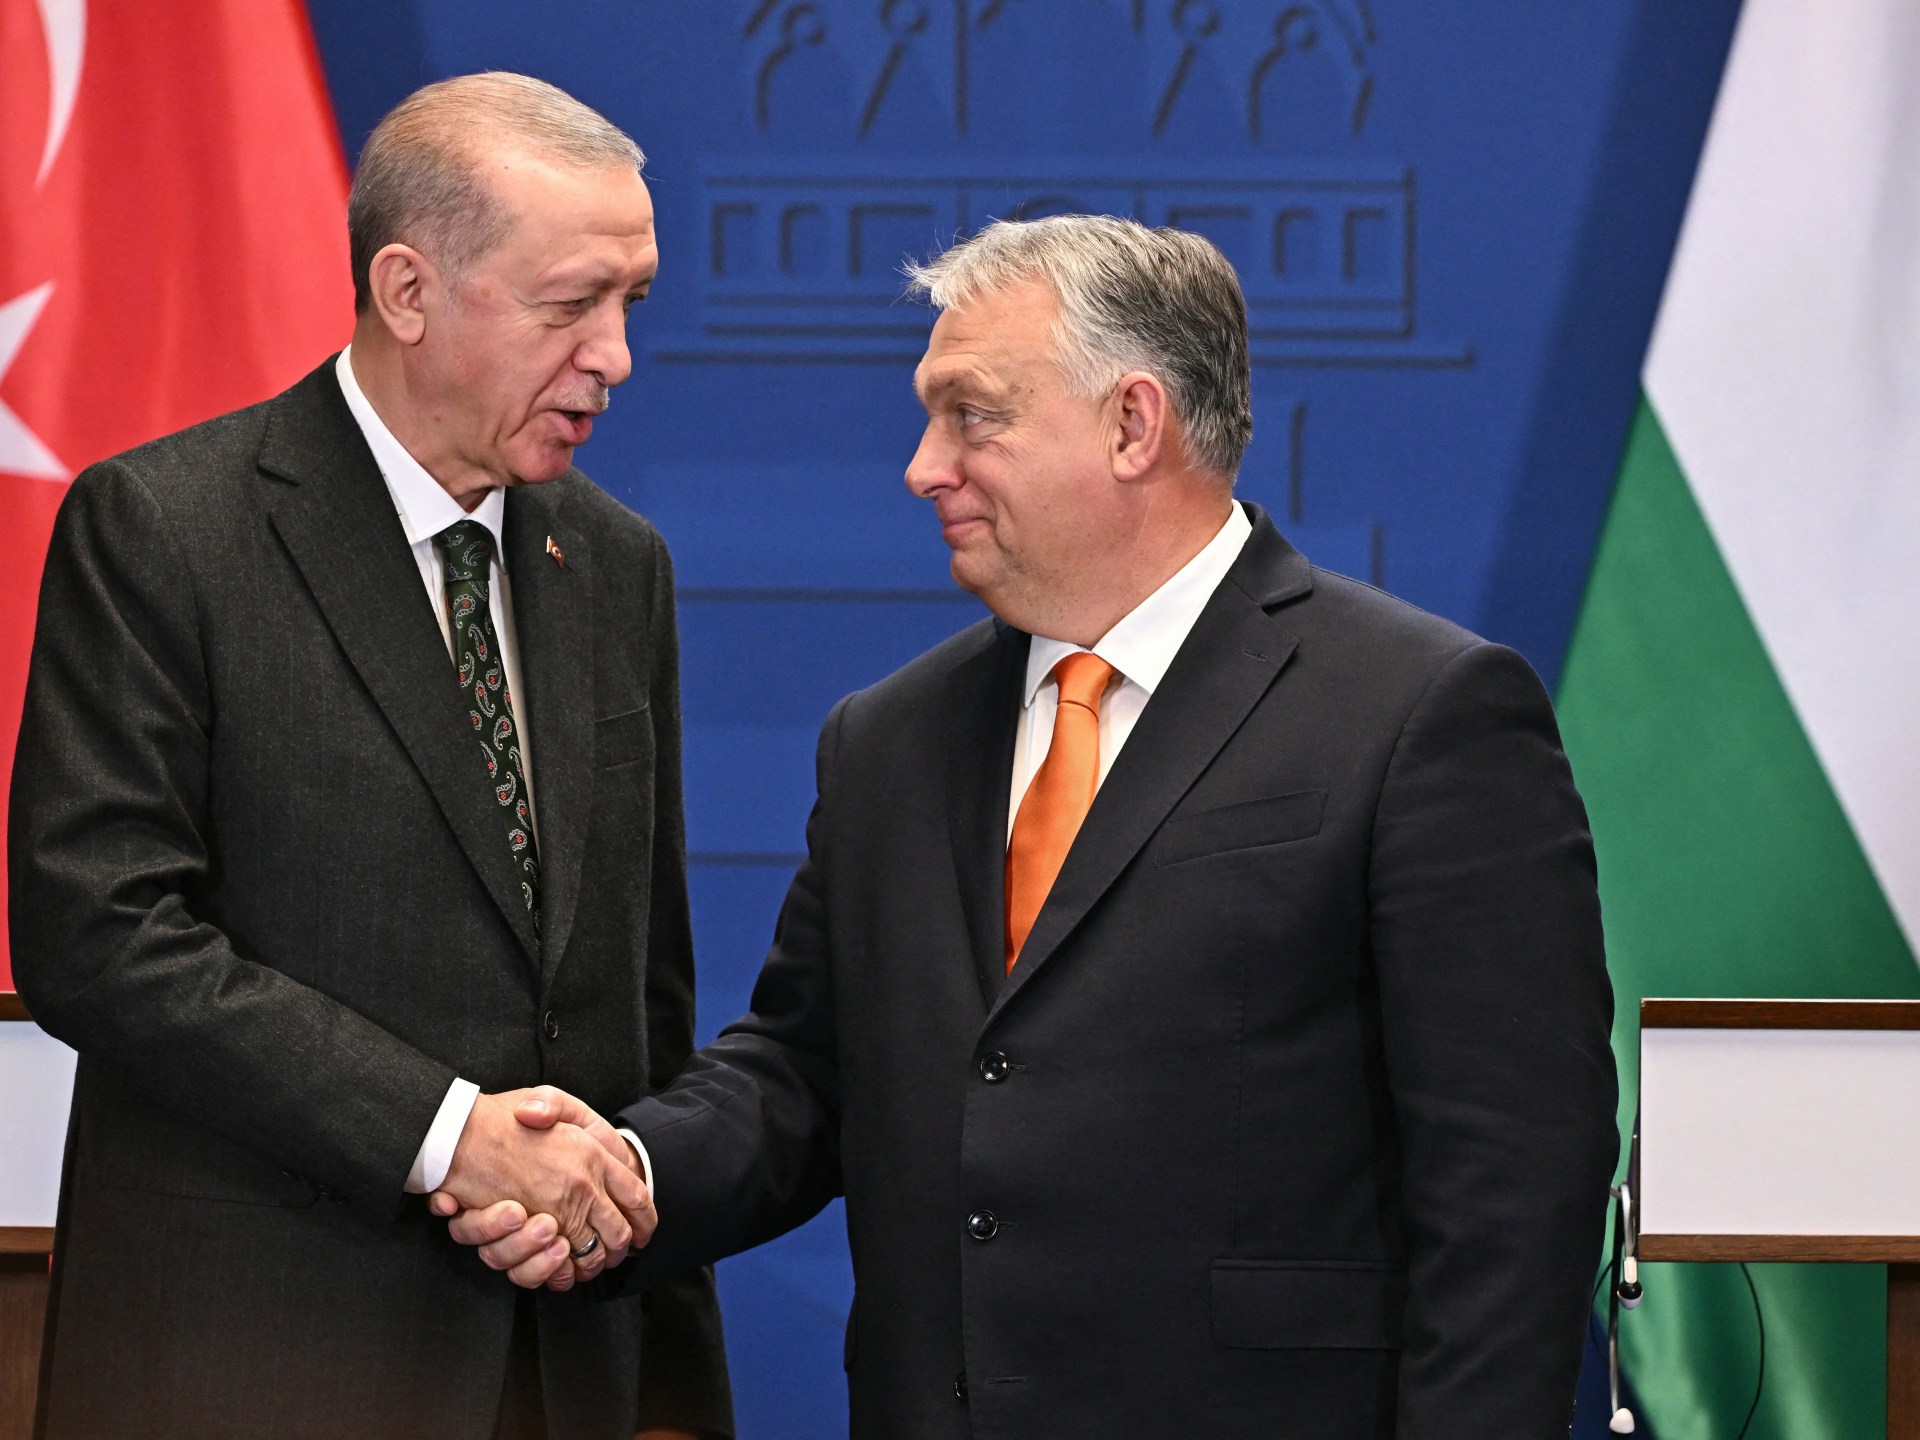 Turkey’s Erdogan and Hungary’s Orban pledge to strengthen ties in Budapest | NATO News